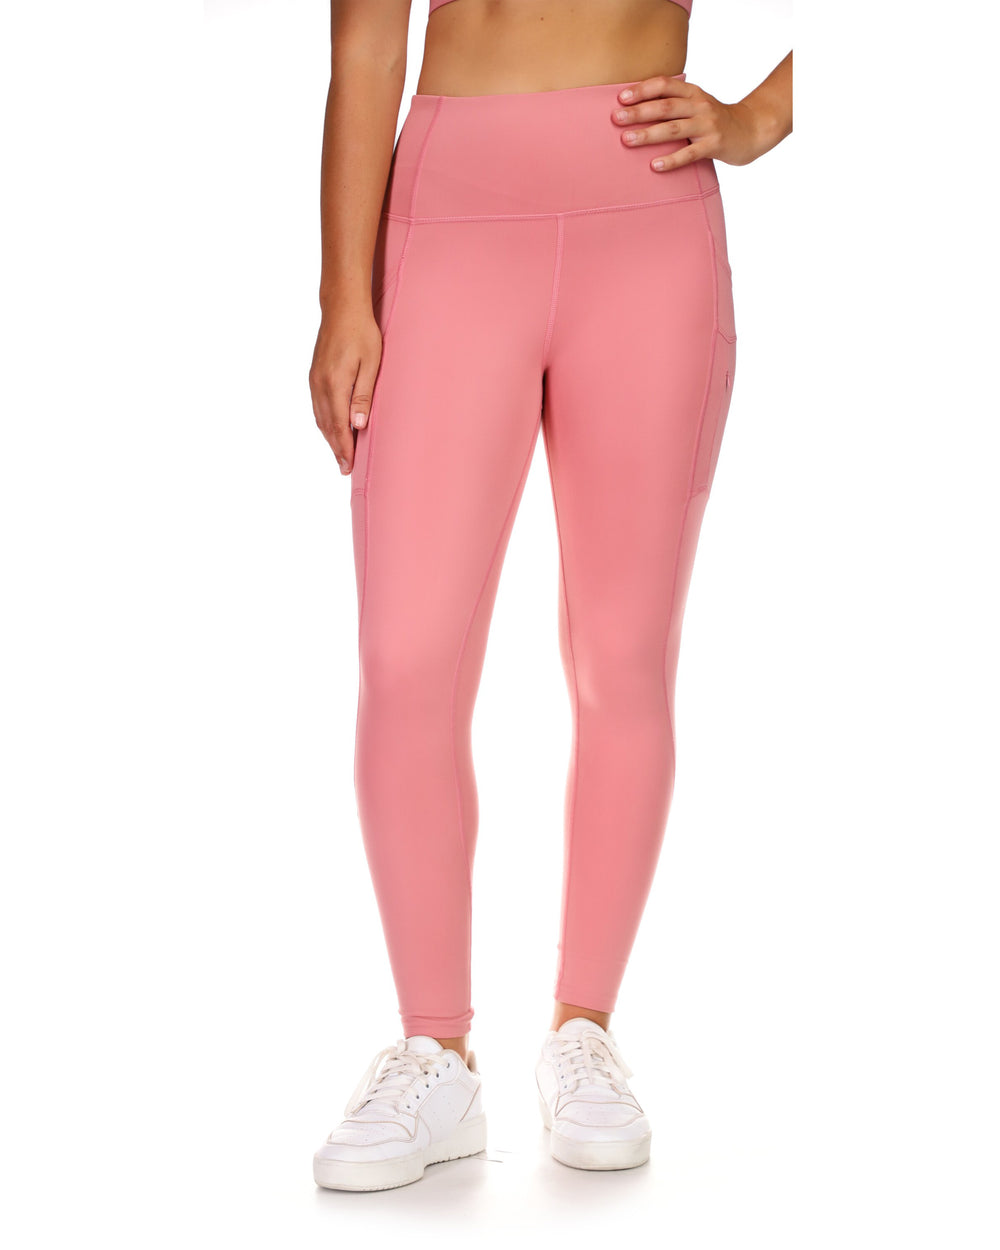 Buy Pink Leggings for Women by ADIDAS Online